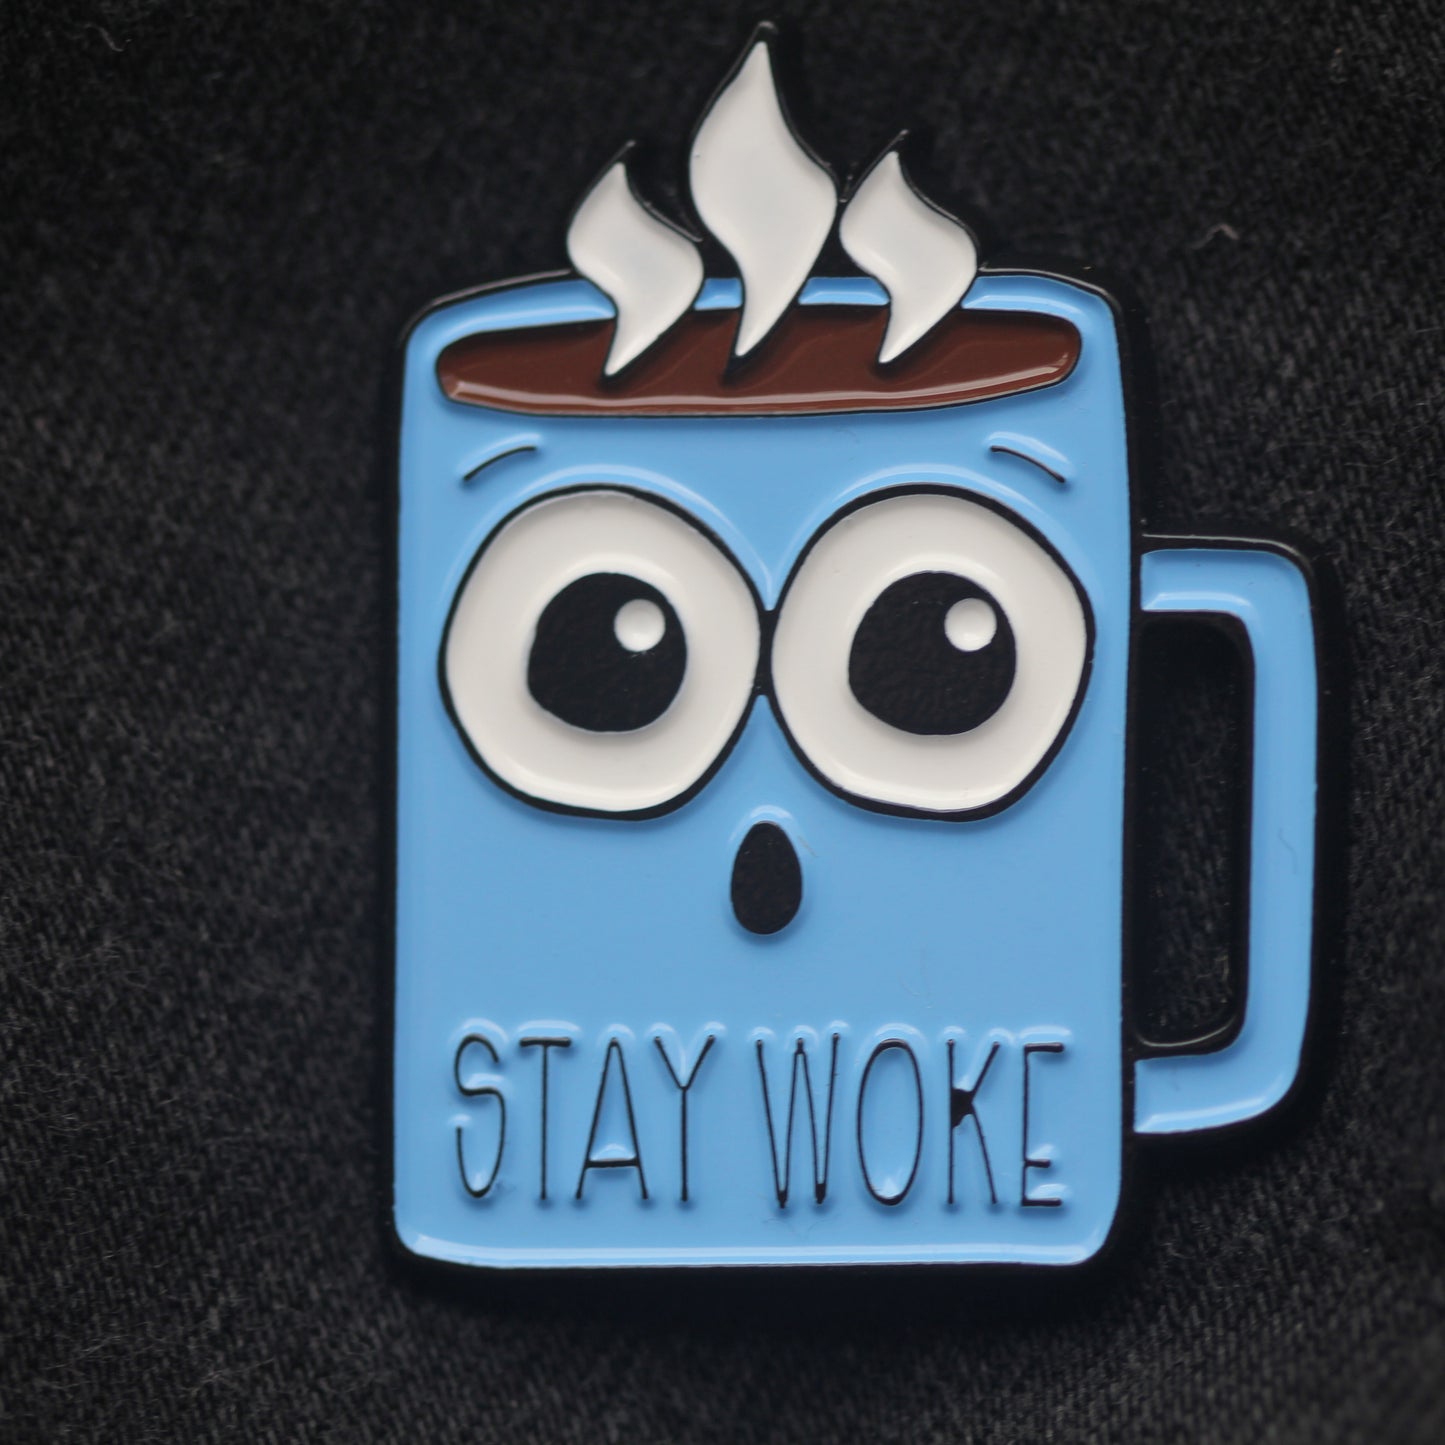 Stay Woke Coffee Pun Soft Enamel Pin | kiss and punch - Kiss and Punch